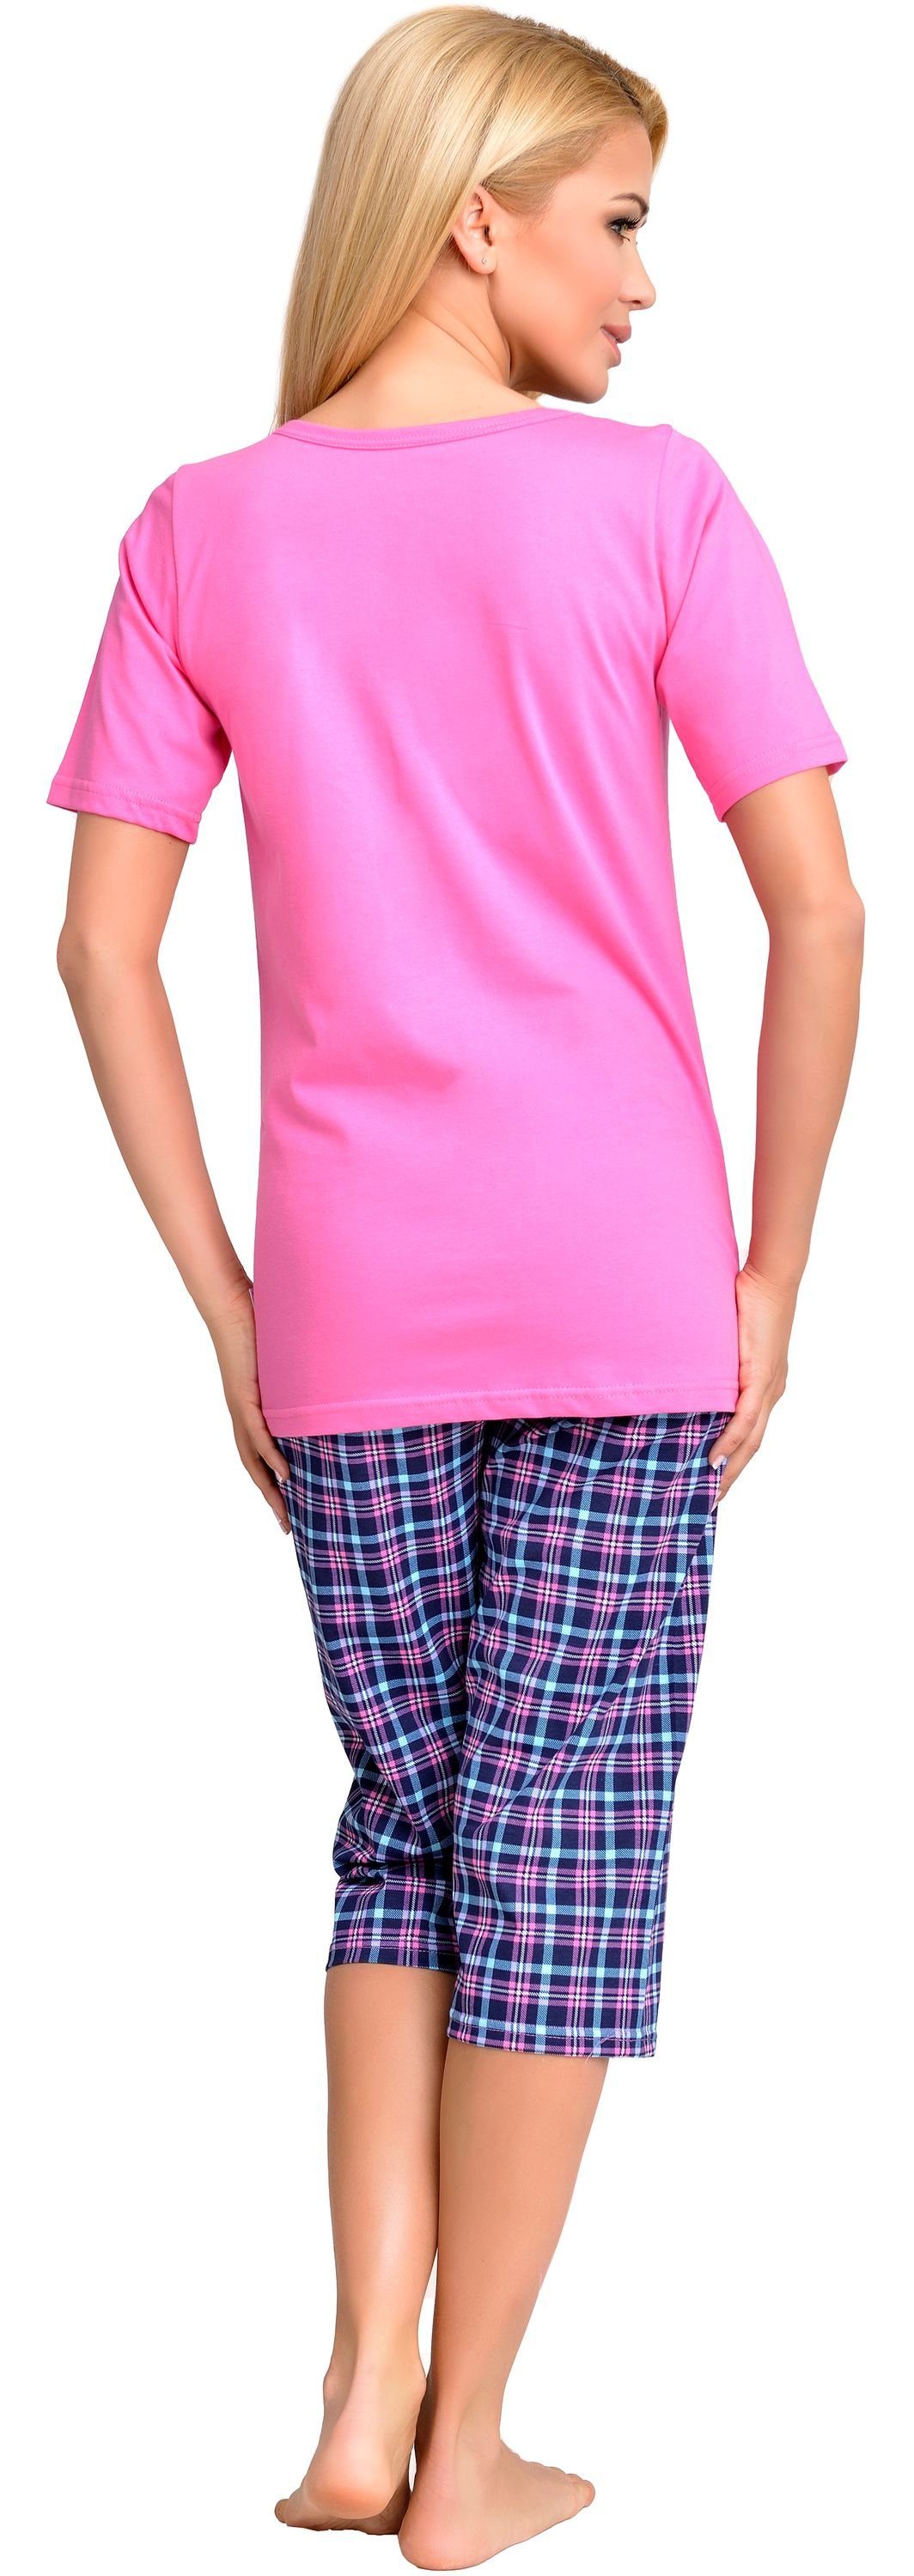 Damen Stillpyjama Umstandspyjama Mammy Rosa H2L2N2 Be Schlafanzug